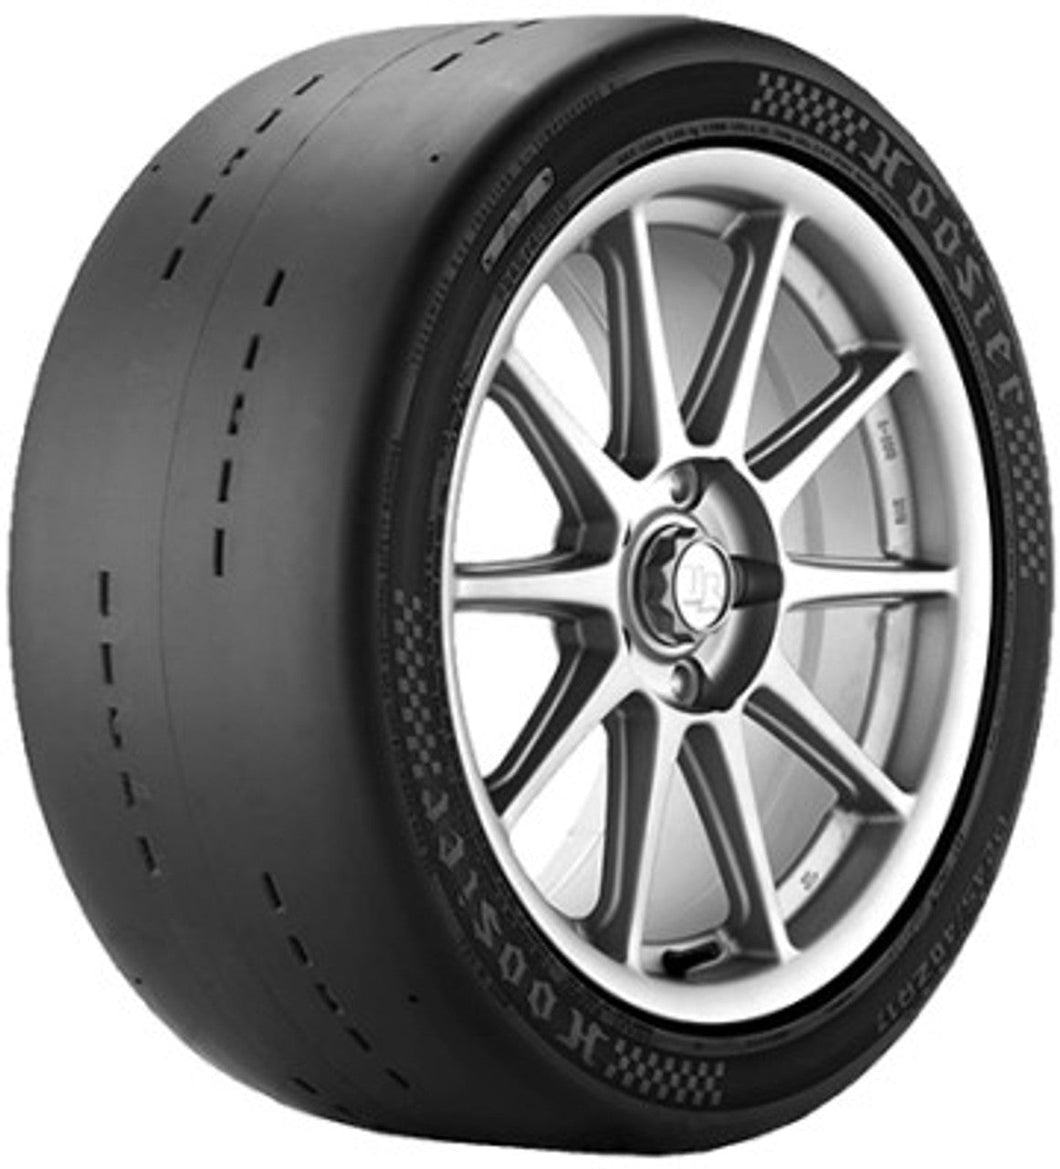 325/30 ZR19 Hoosier Tire Slick D.O.T Neumático